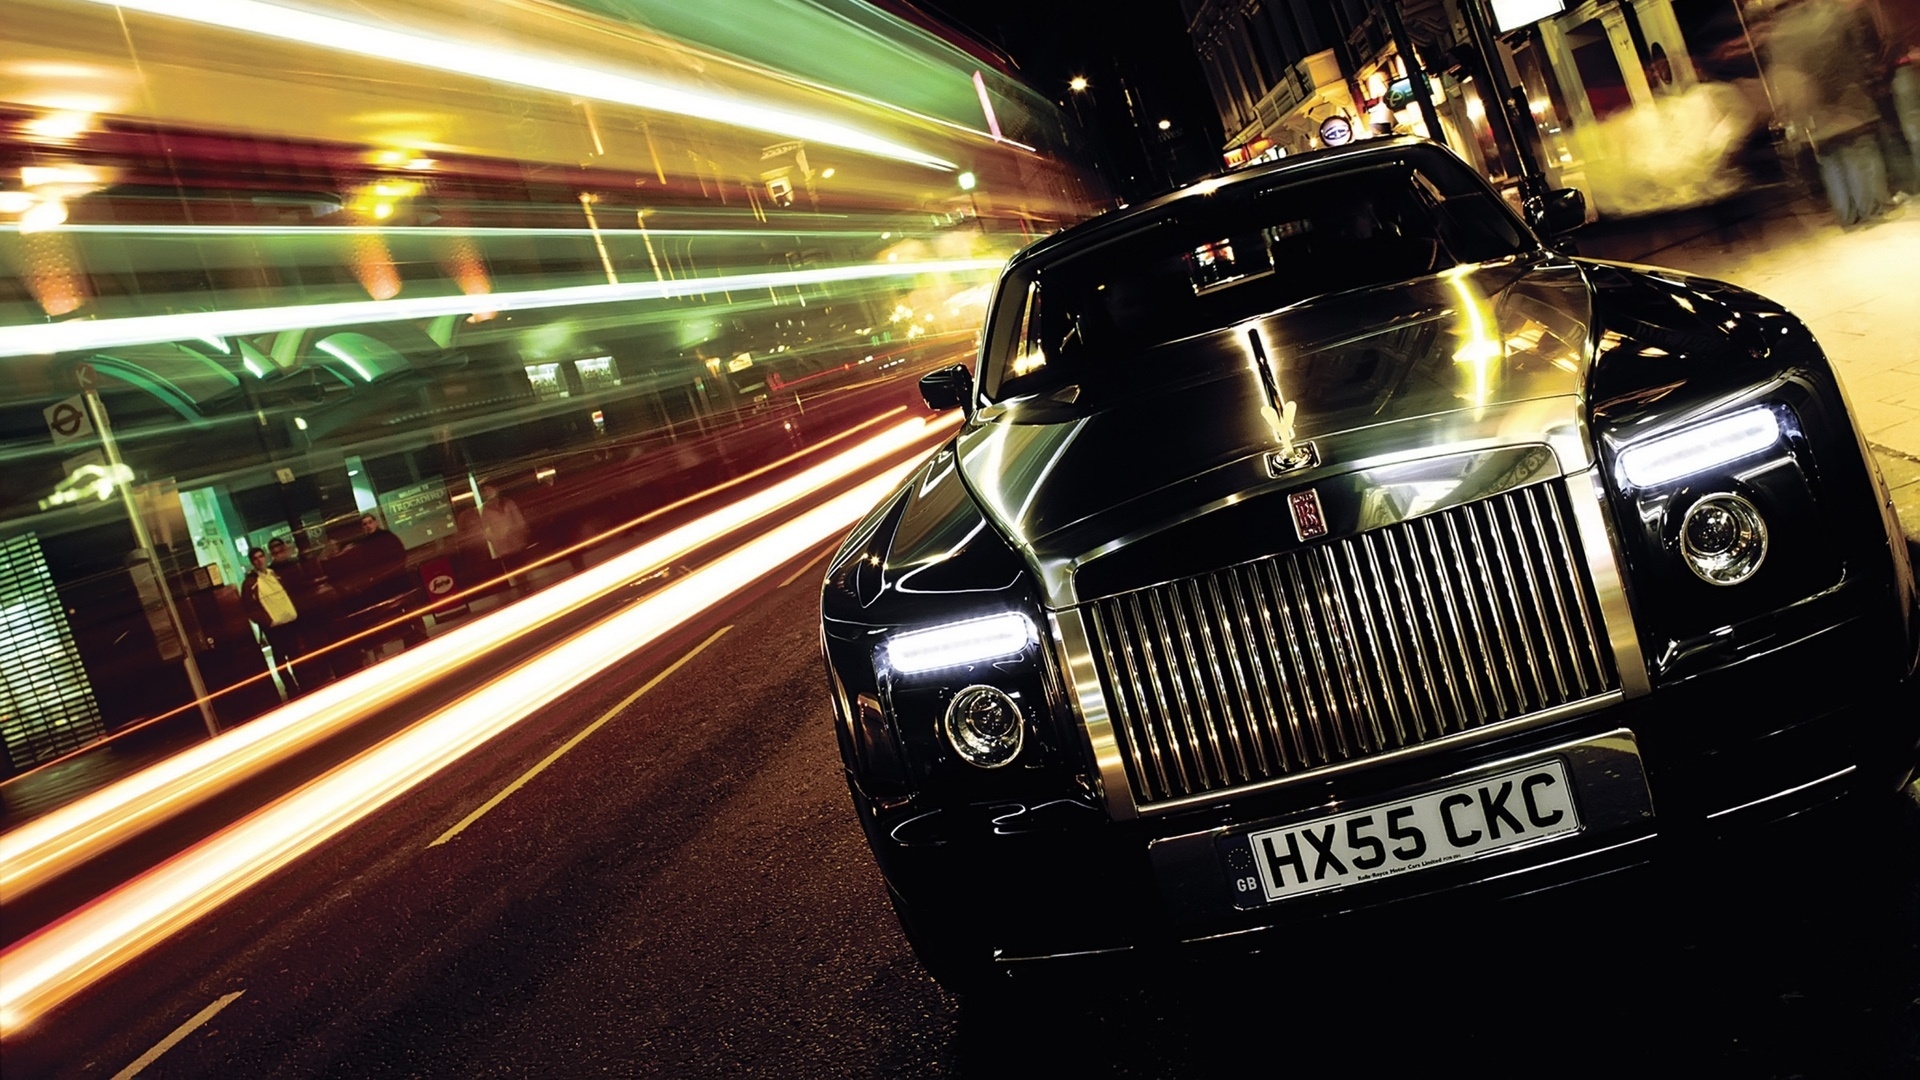 Rolls Royce Phantom Drophead Coupe for 1920 x 1080 HDTV 1080p resolution